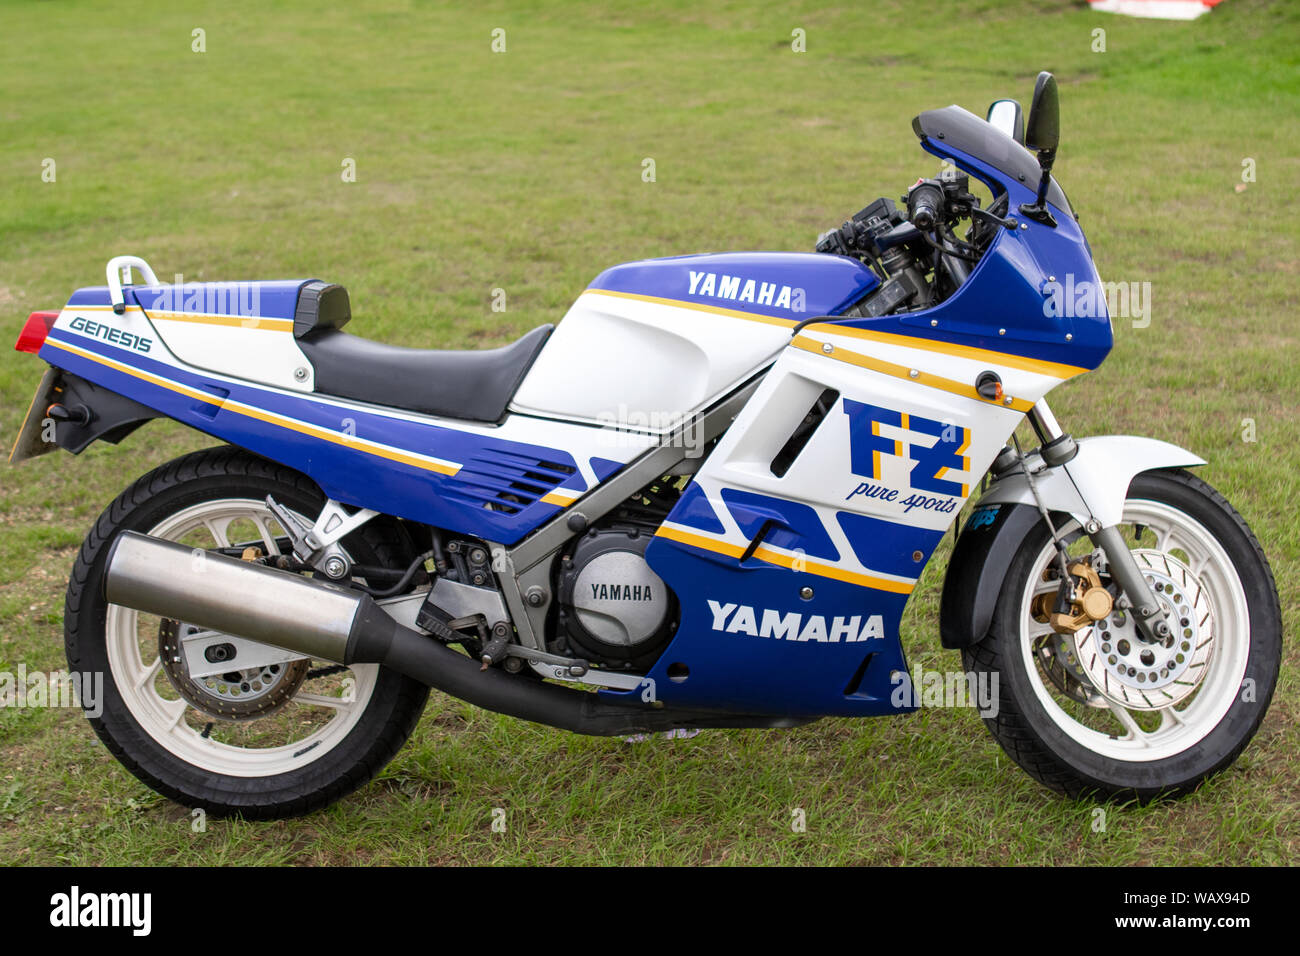 Yamaha fz hi-res stock photography and images - Alamy